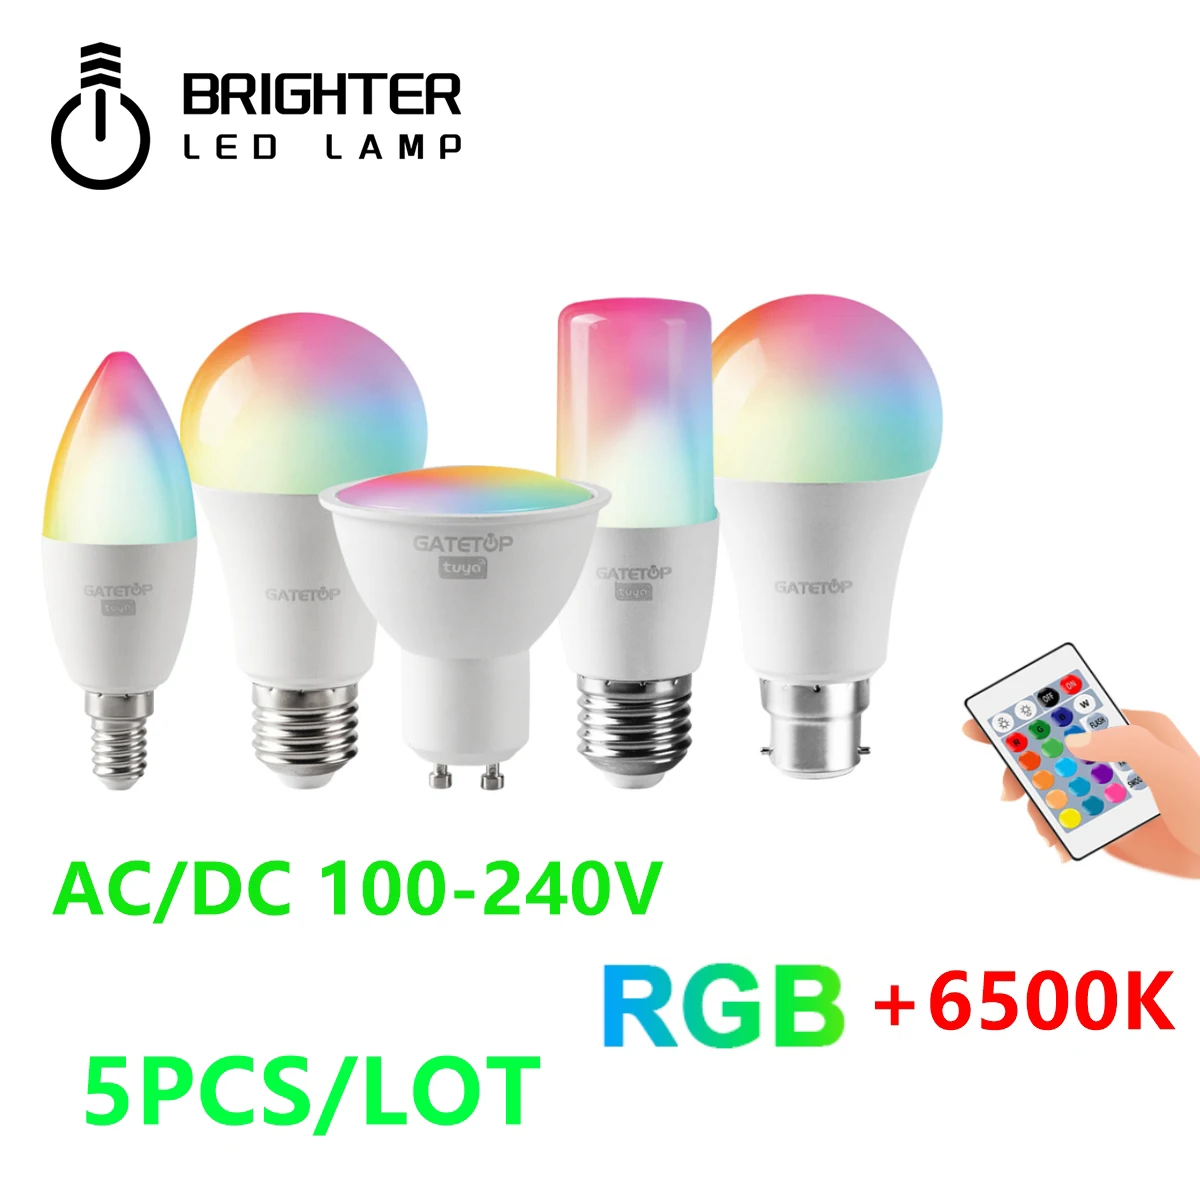 

5PCS LED infrared remote control RGB white light smart bulb E27 GU10 E14 B22 AC100-240V suitable for house party party lighting